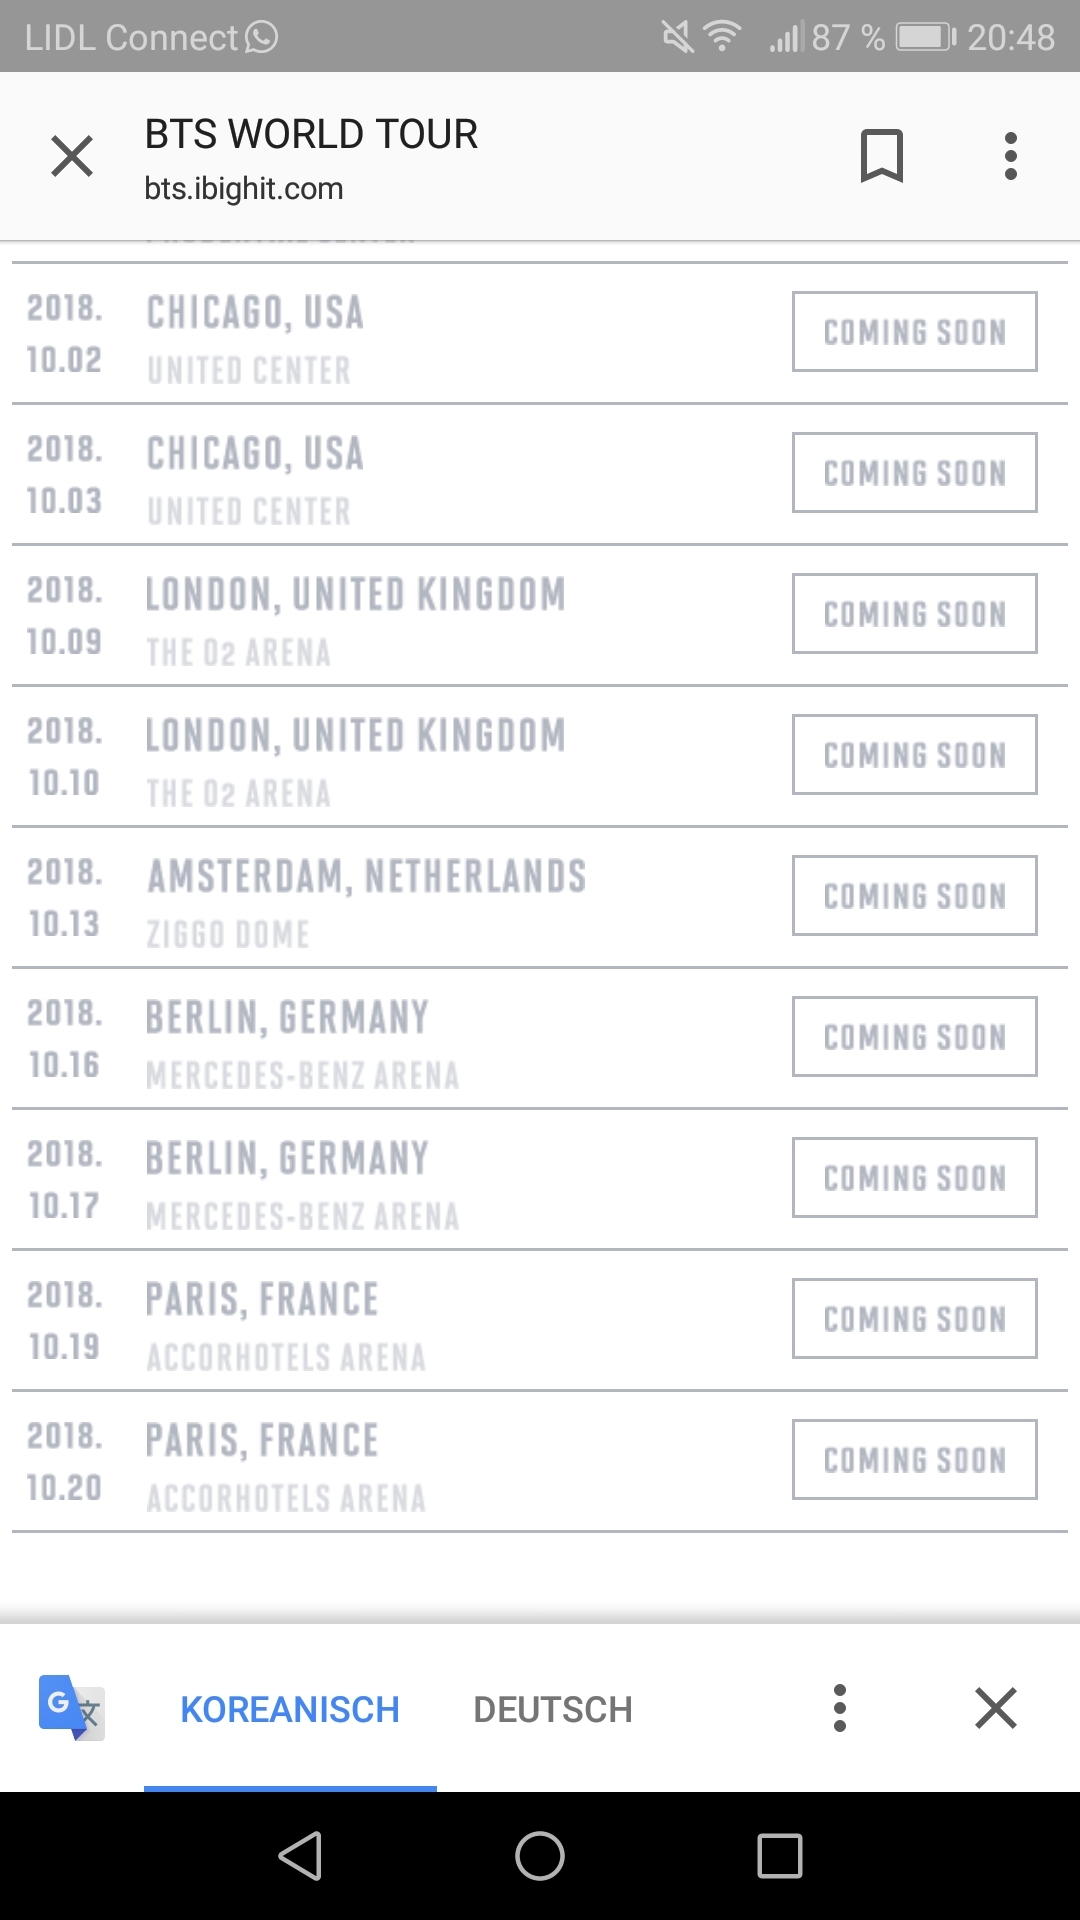 BTS WORLD TOUR 2018 [Schedule] | allkpop Forums1080 x 1920